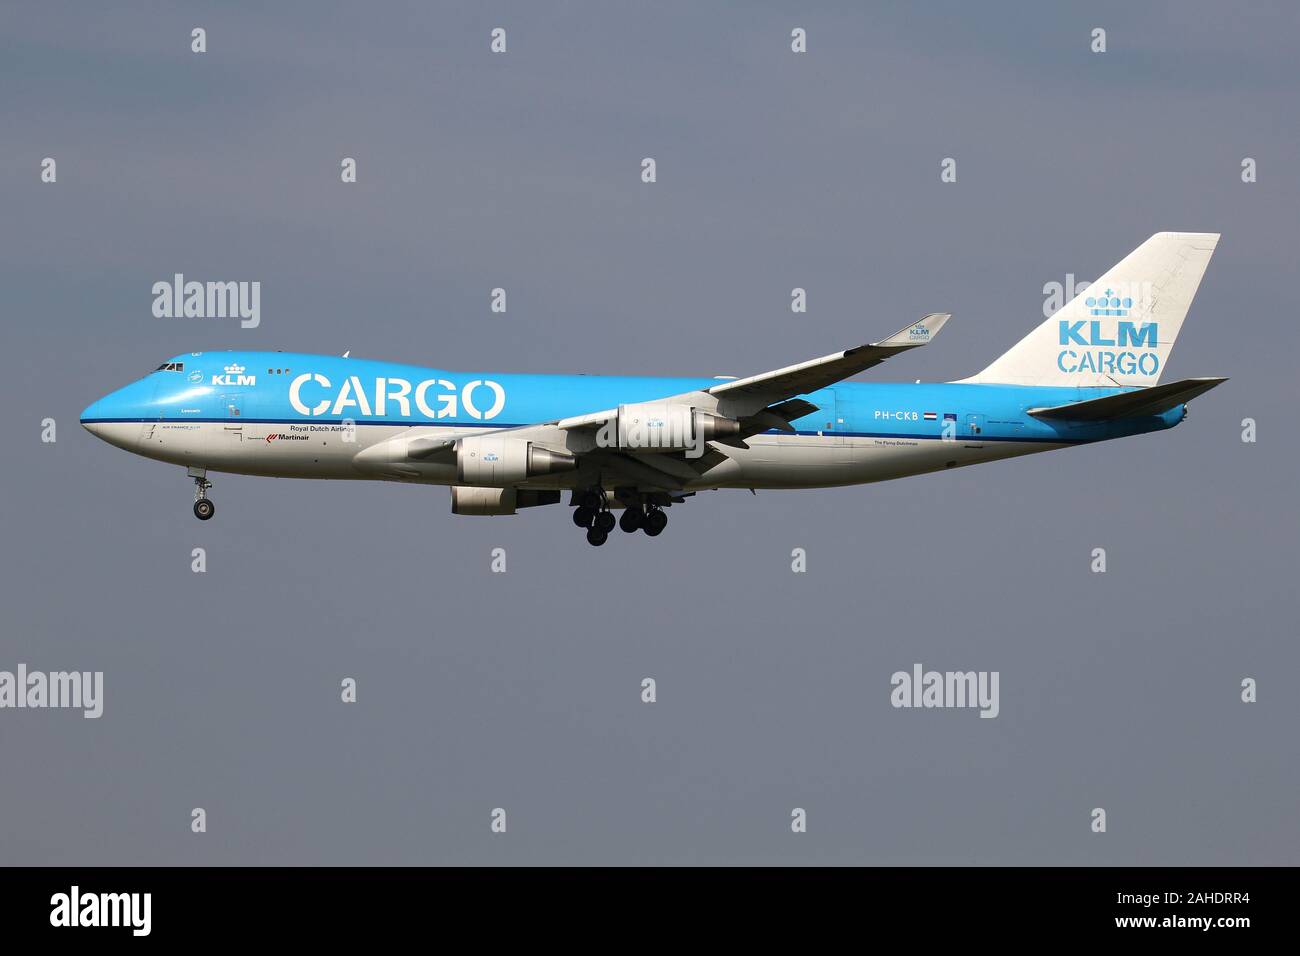 Martinair cargo 747 hi-res stock photography and images - Alamy